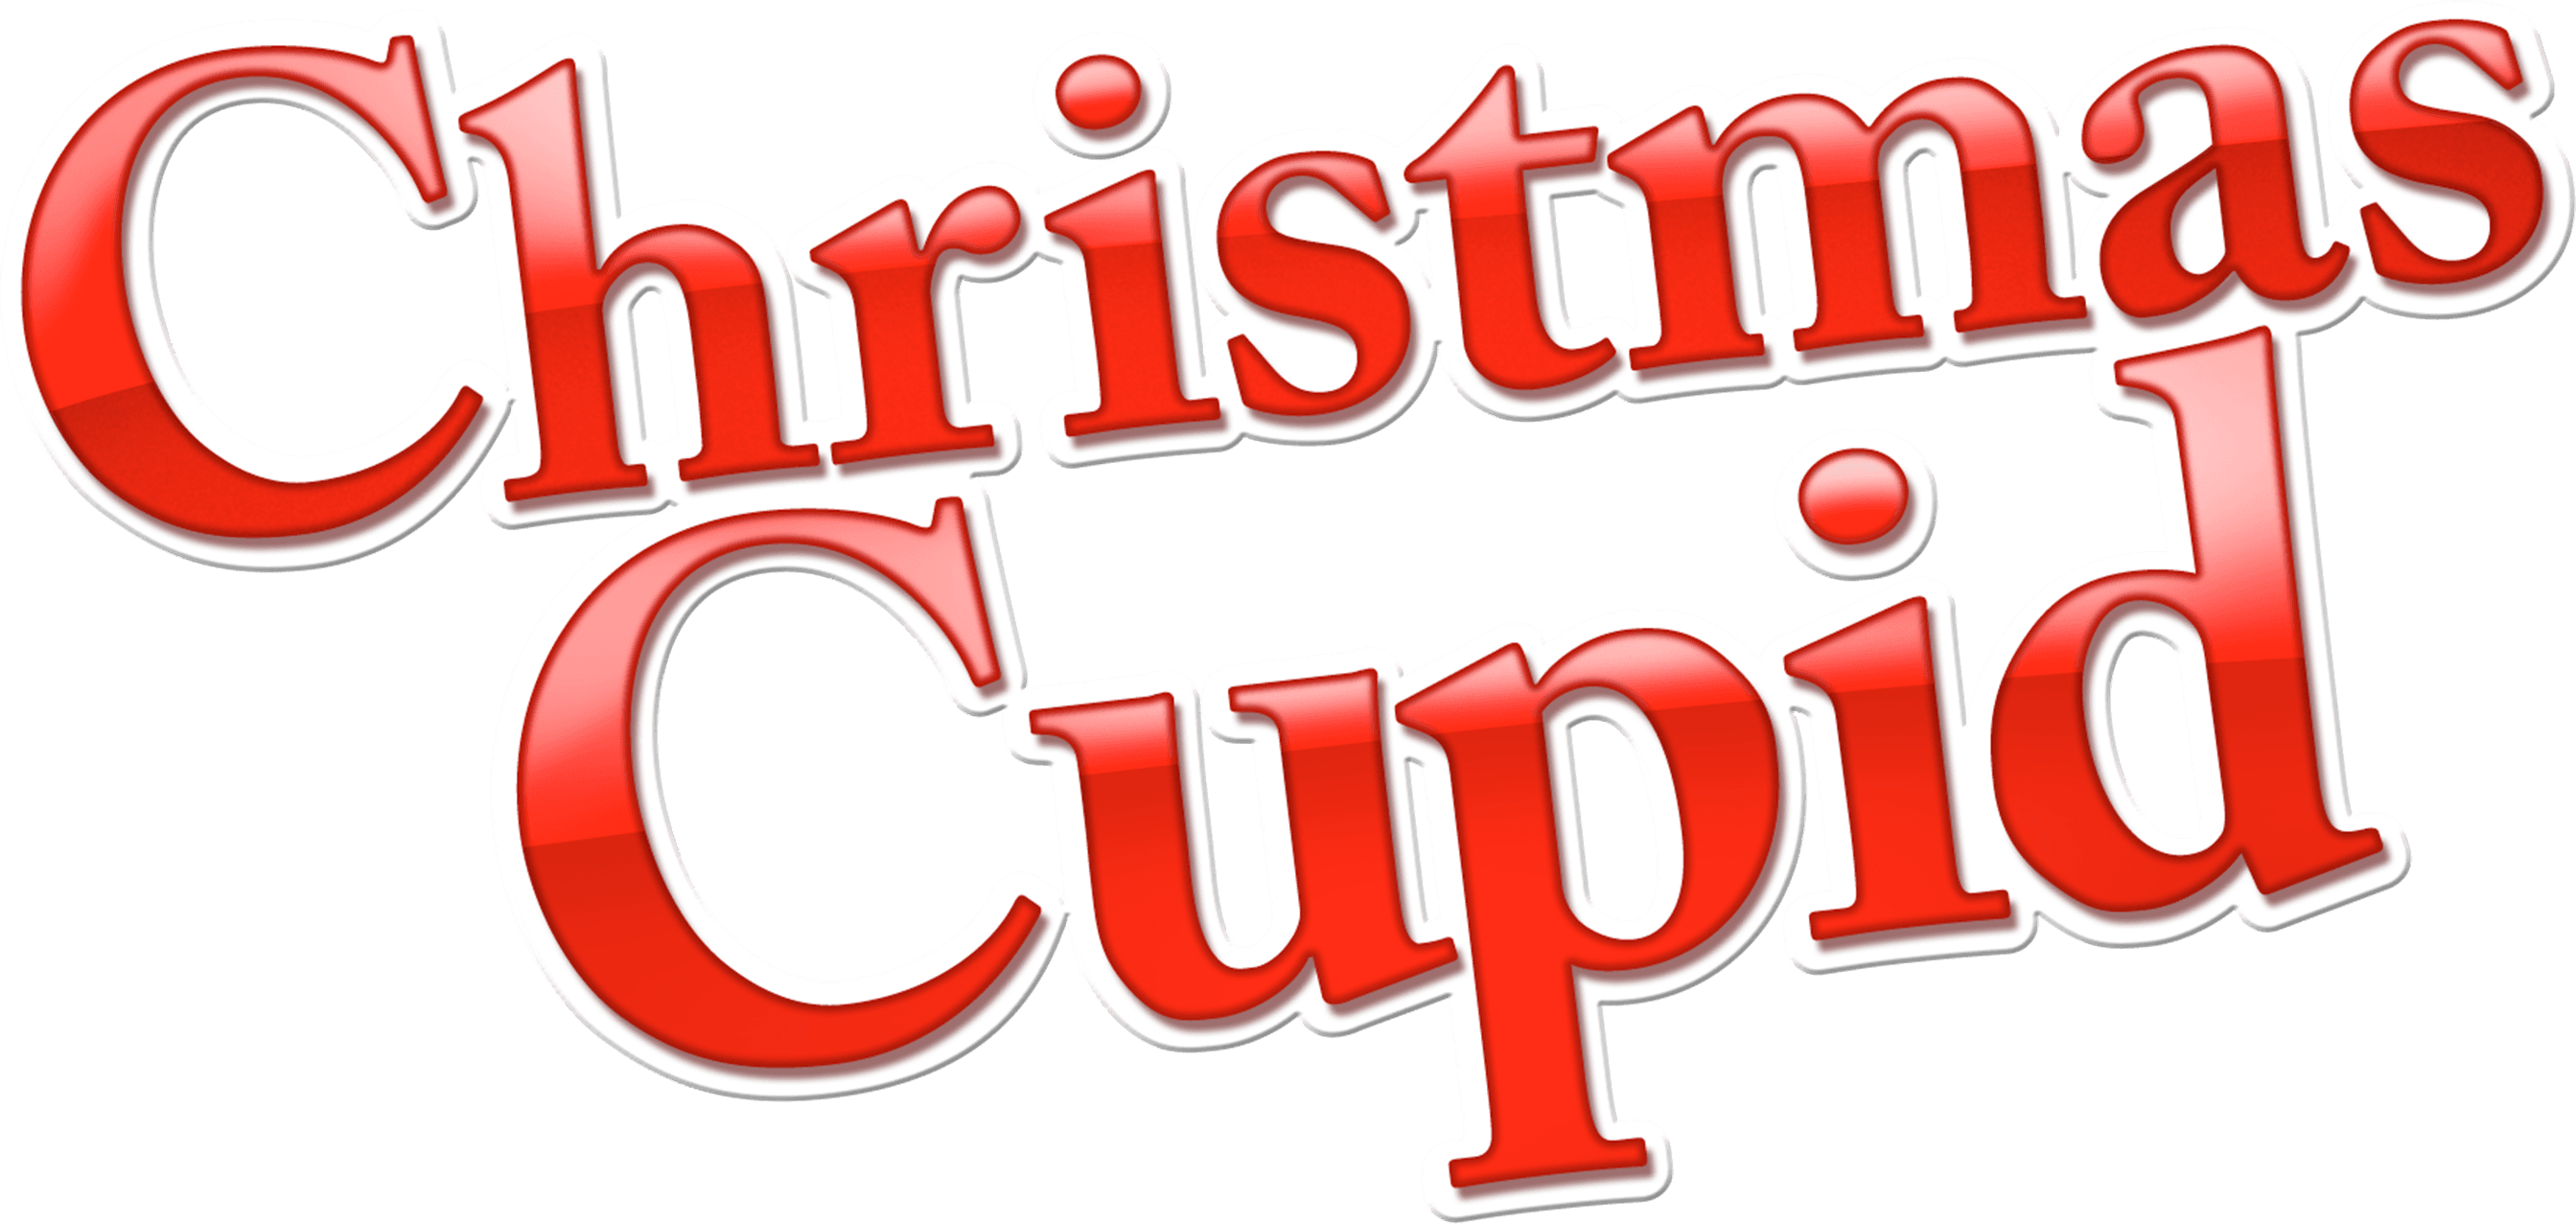 Christmas Cupid logo